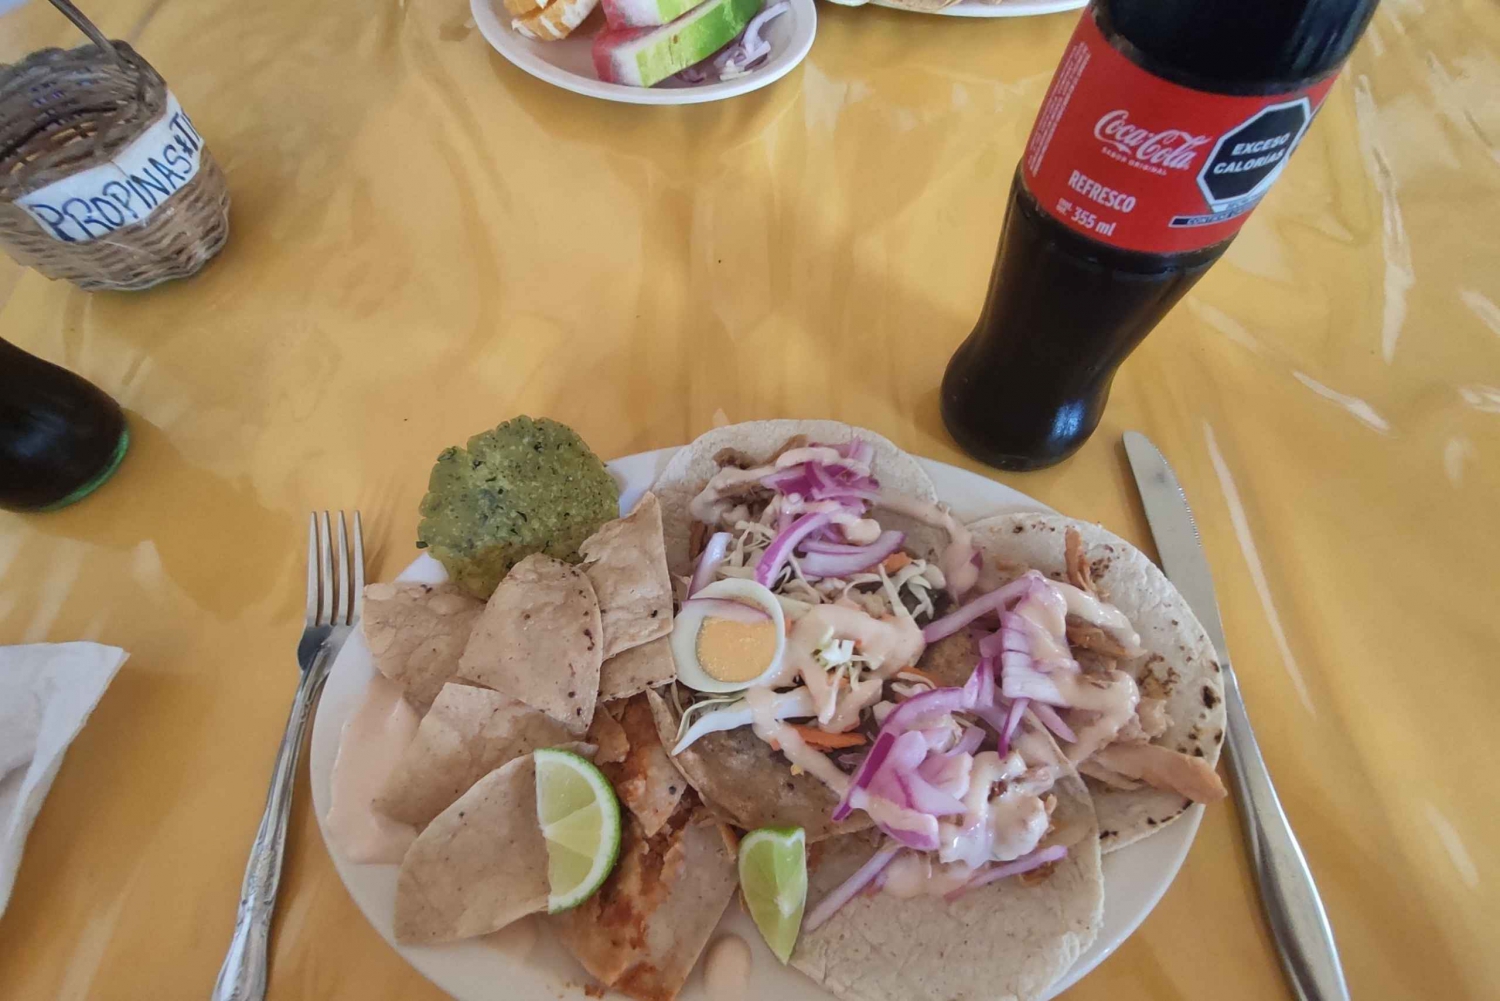 Chichen Itza, Cenote, Valladolid Day Trip with Lunch